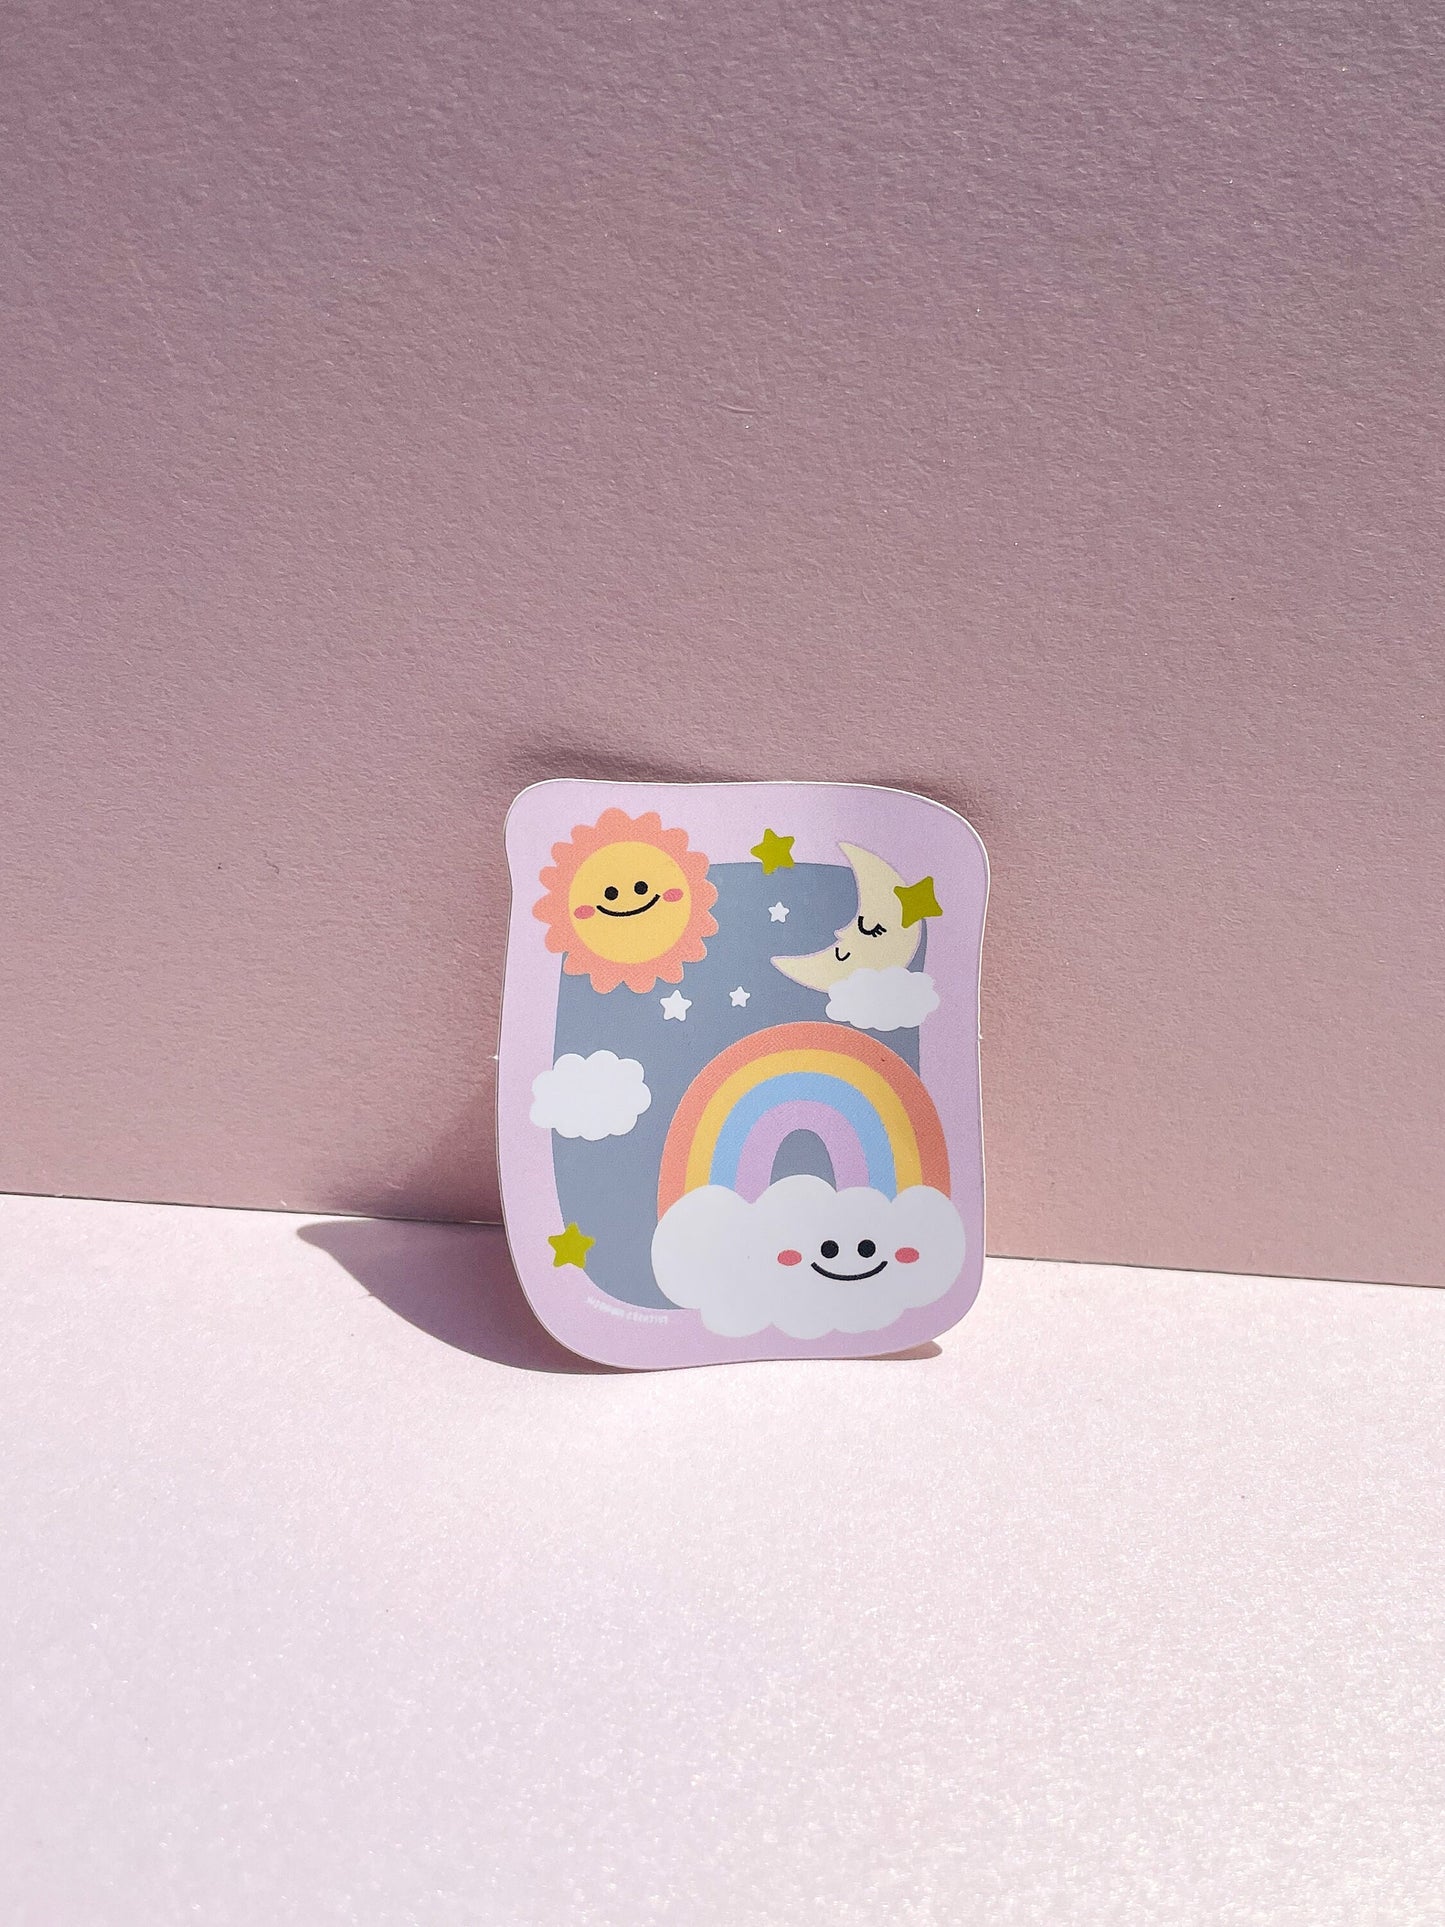 The Sky Friends Sticker//Digital Art//Weather Stickers//Illustration//kawaii//Waterproof Sticker//Rainbow Stickers//Matte Mirror Stickers